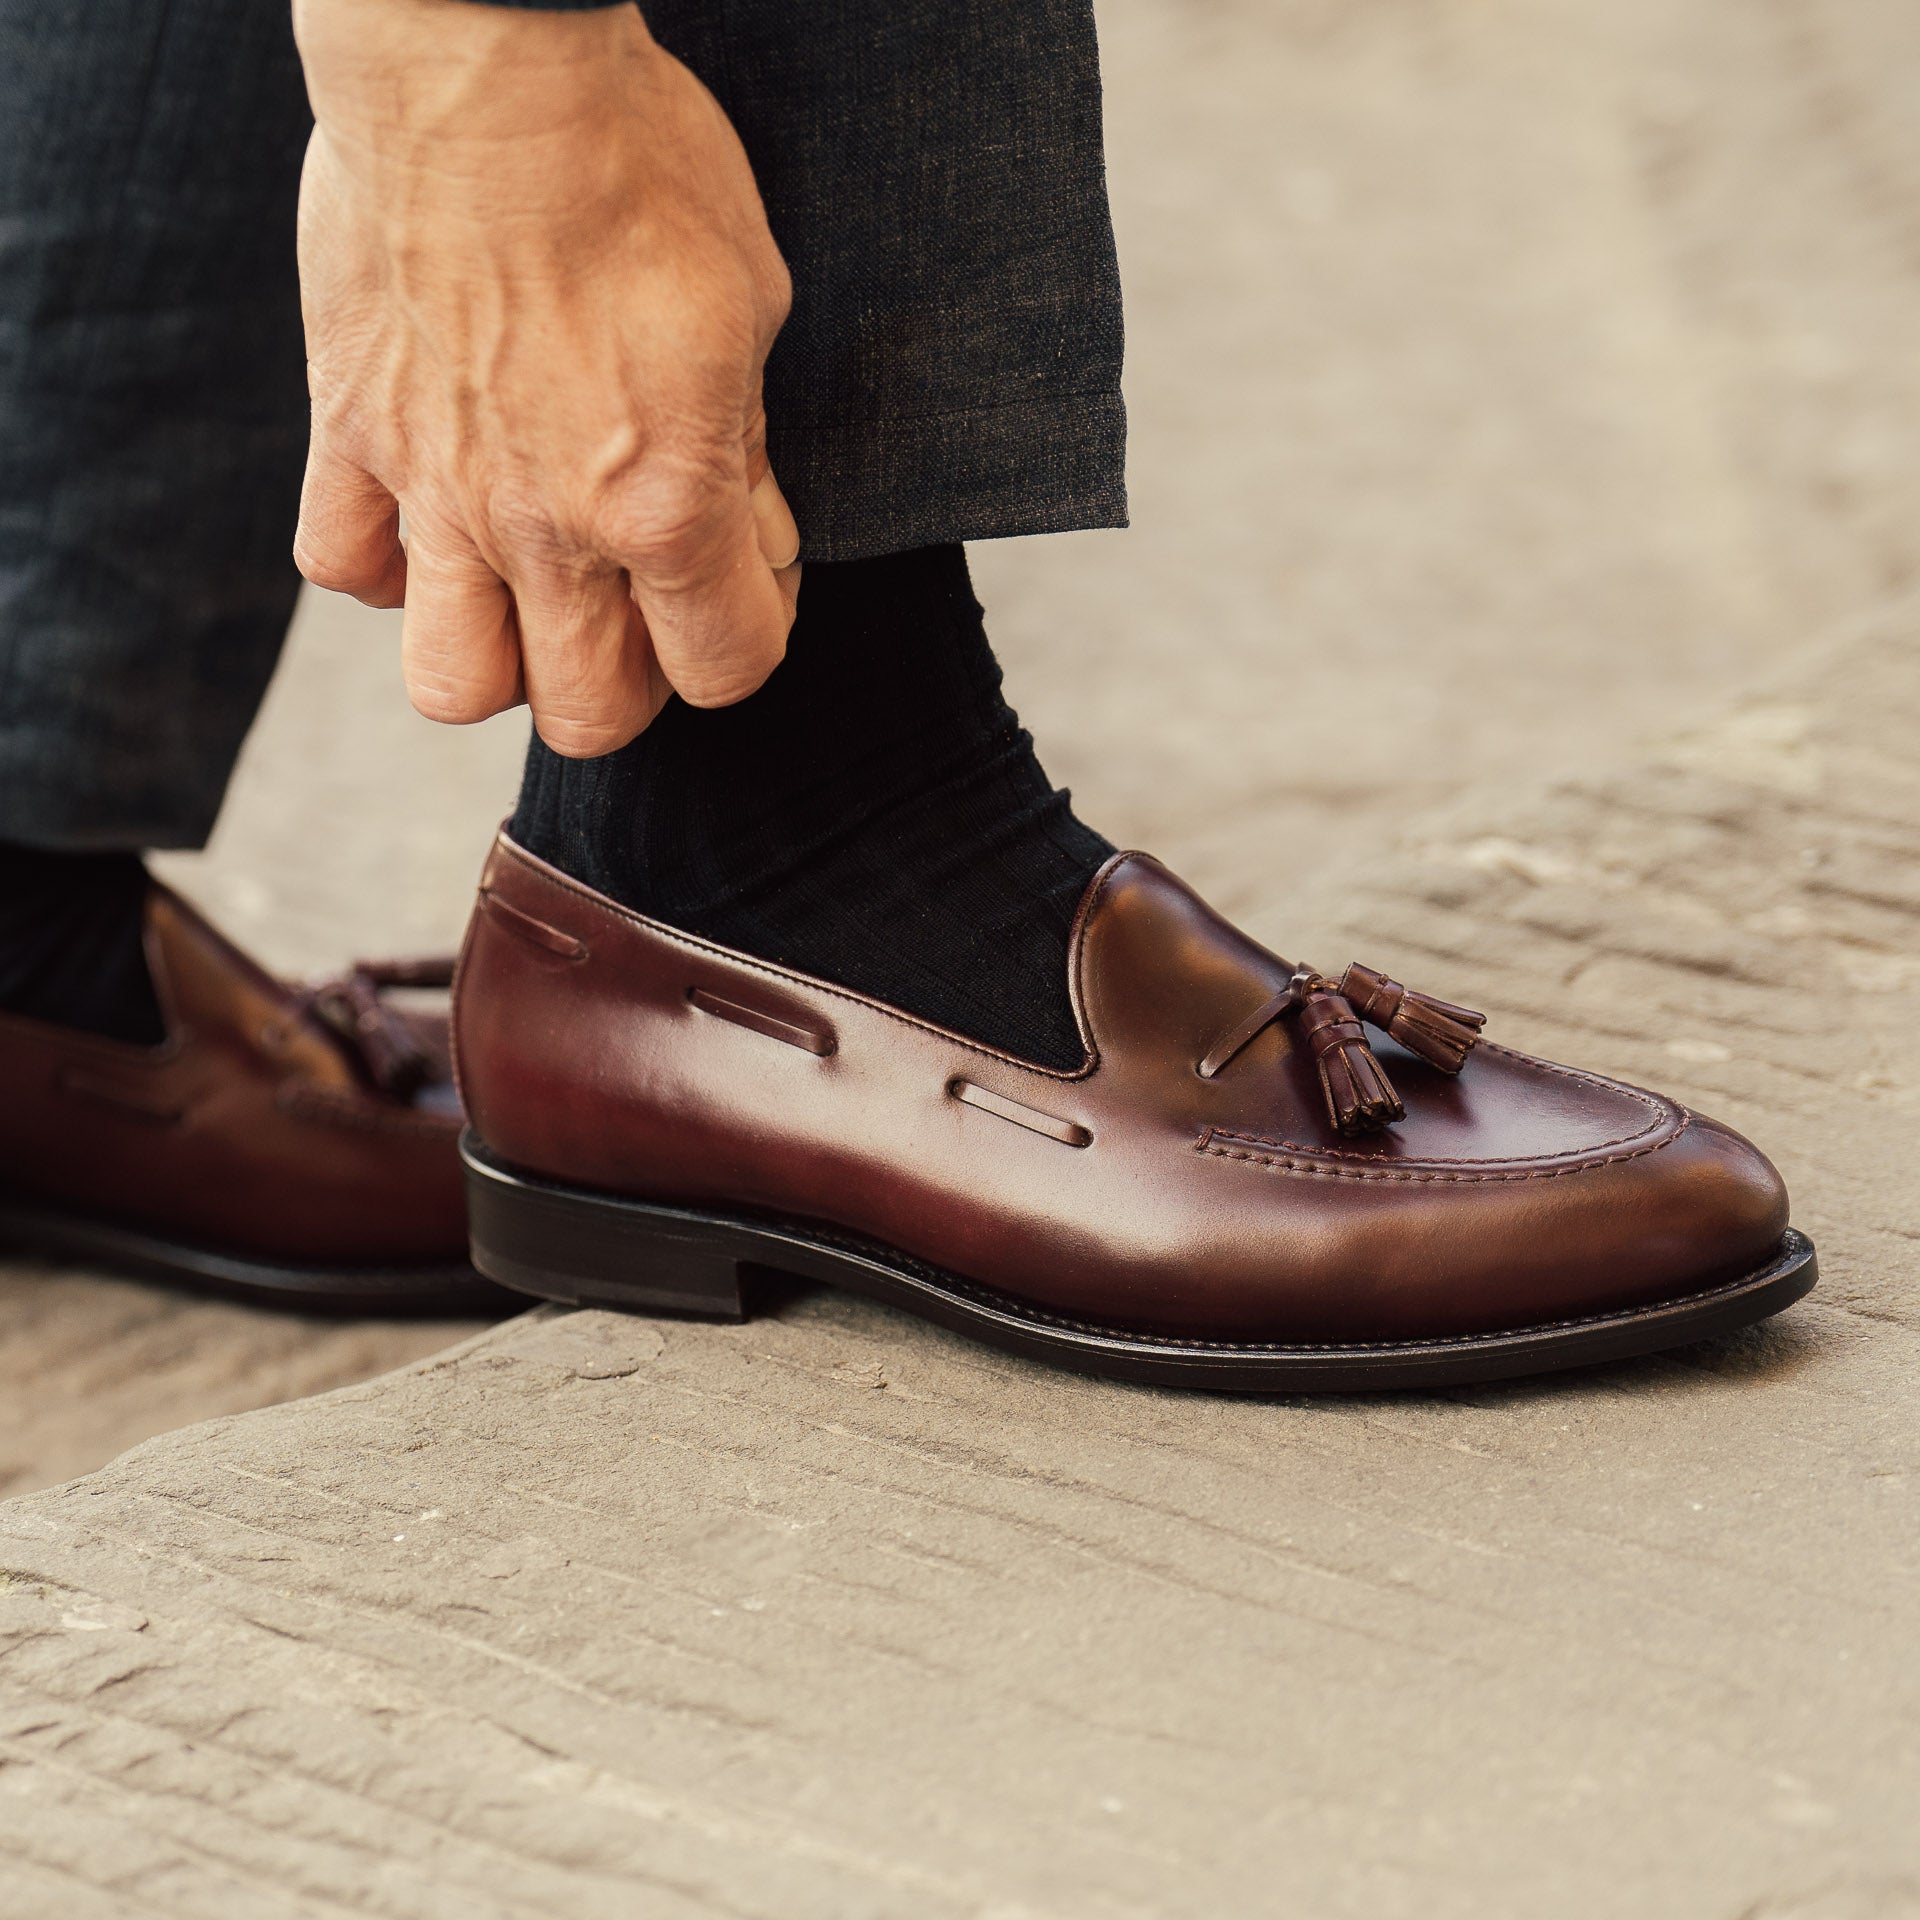 Velasca | Burgundy Tassel Loafers in cordovan leather